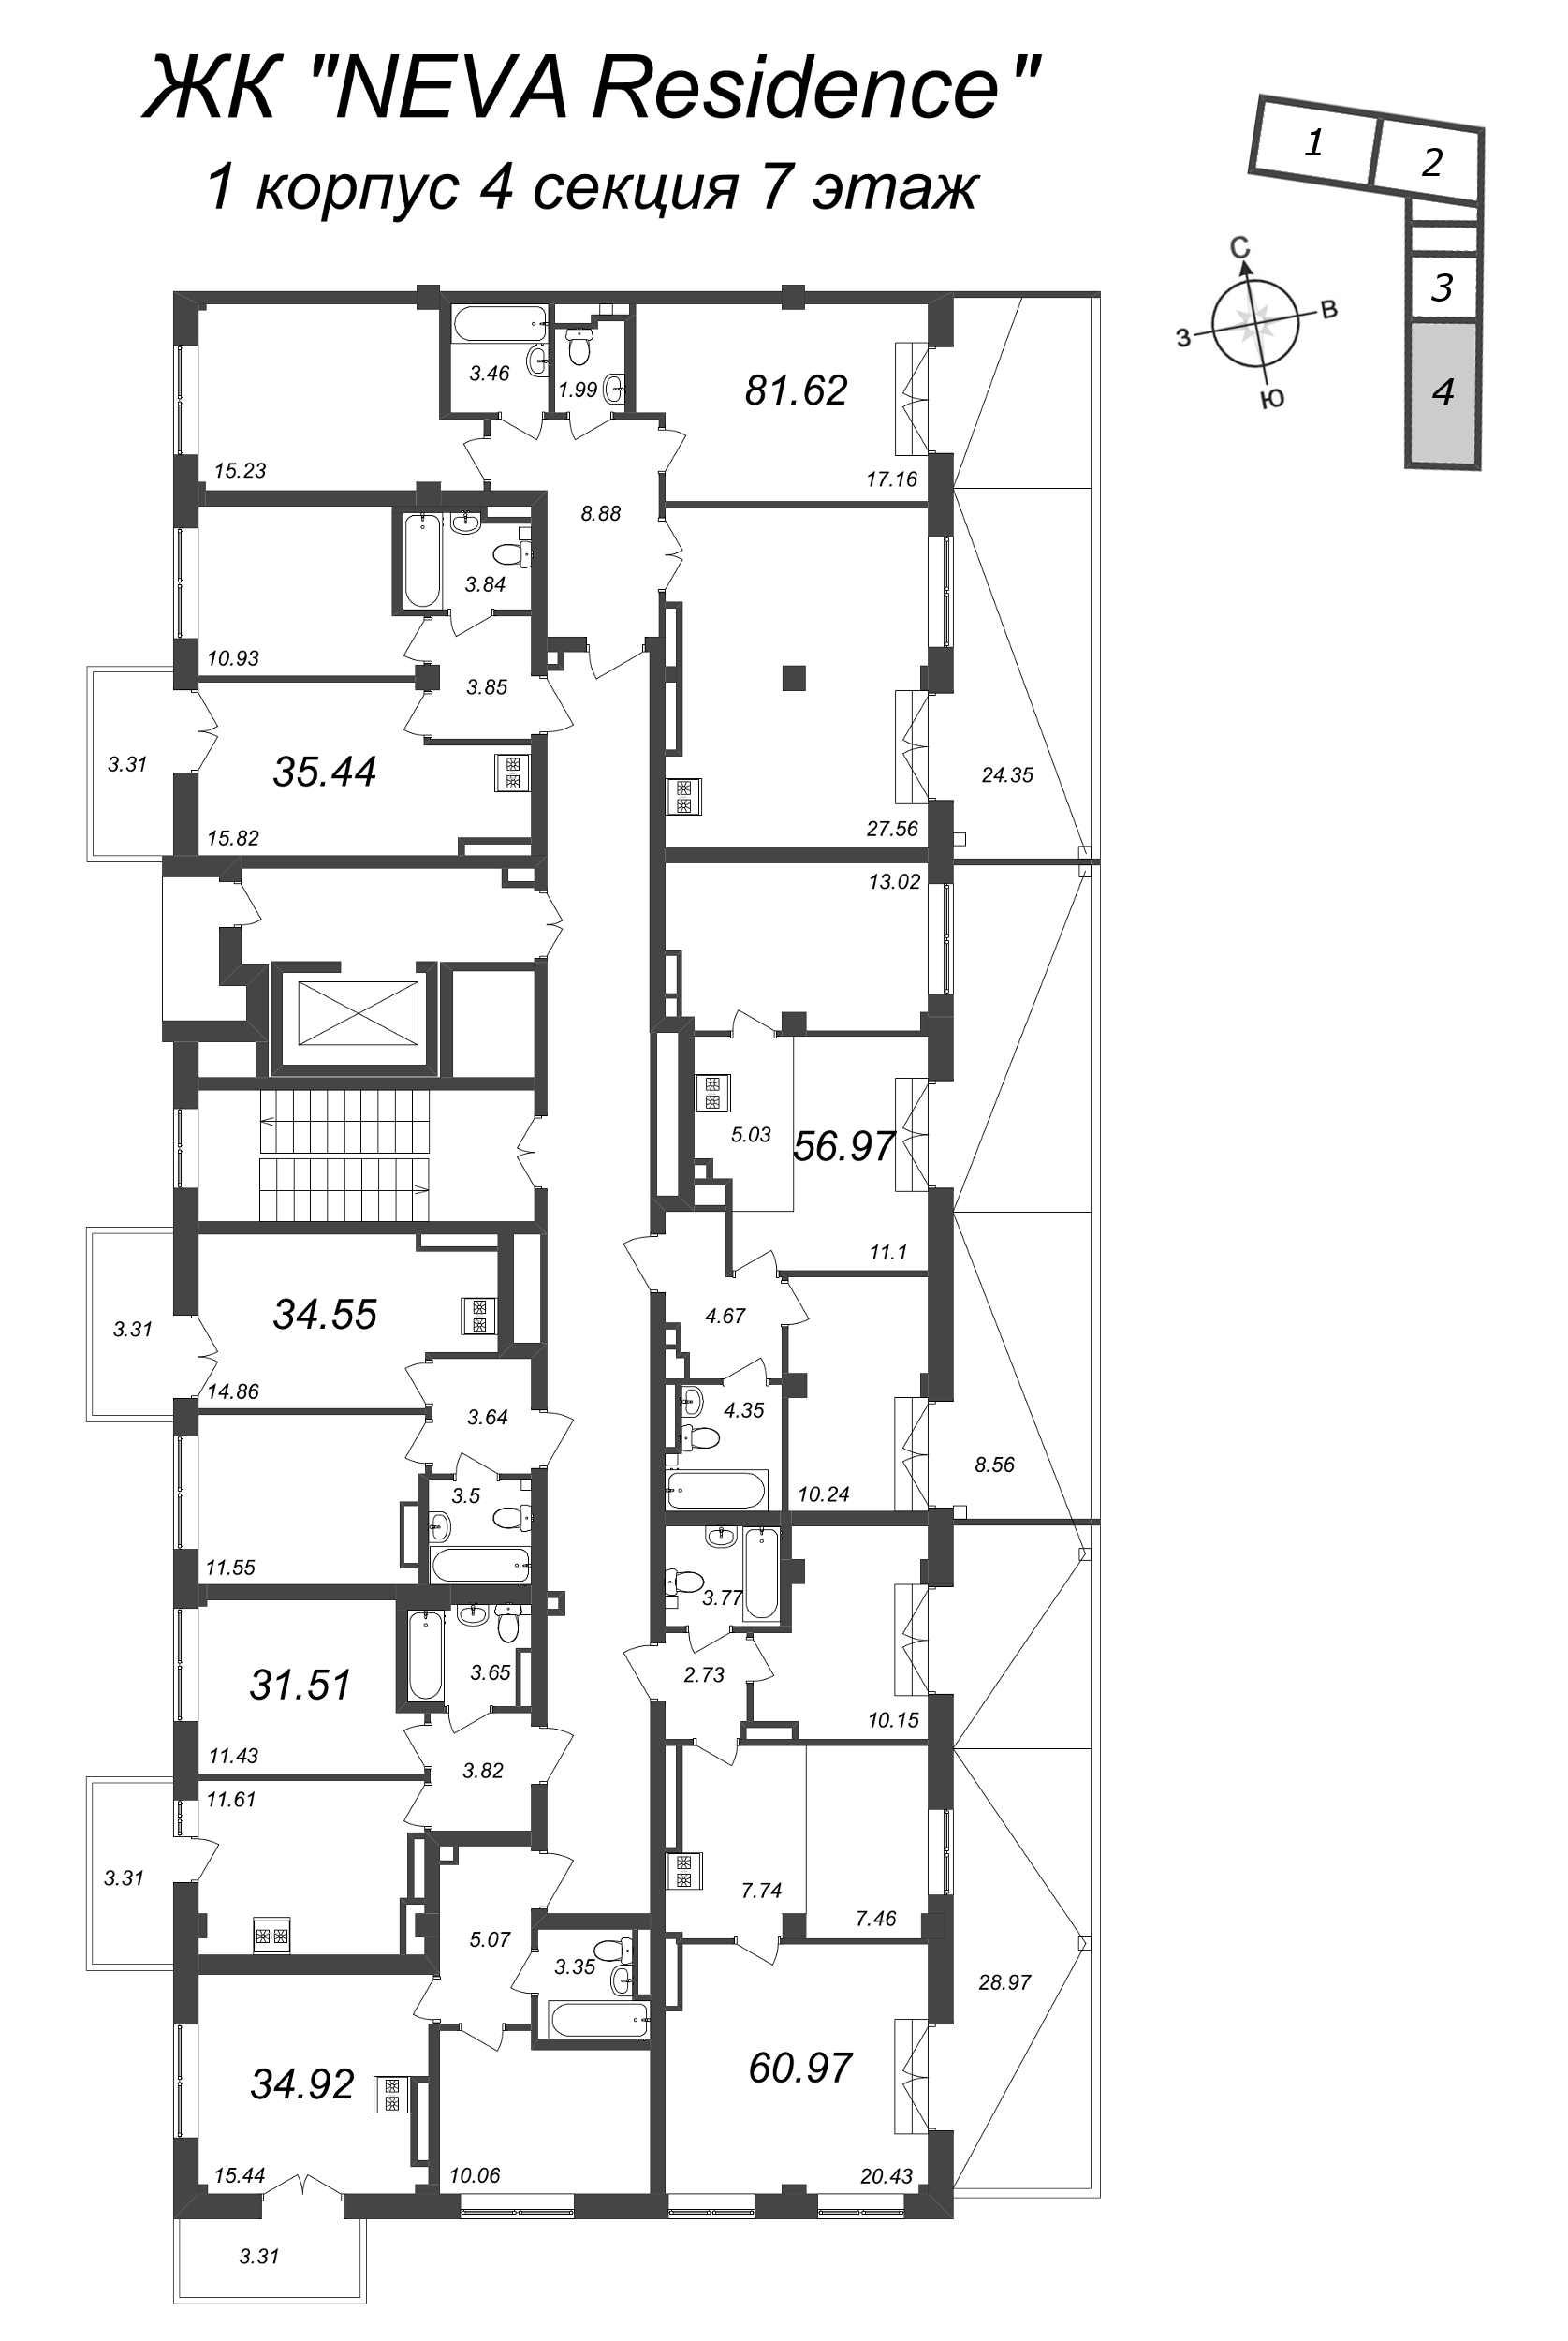 2-комнатная (Евро) квартира, 35.44 м² - планировка этажа